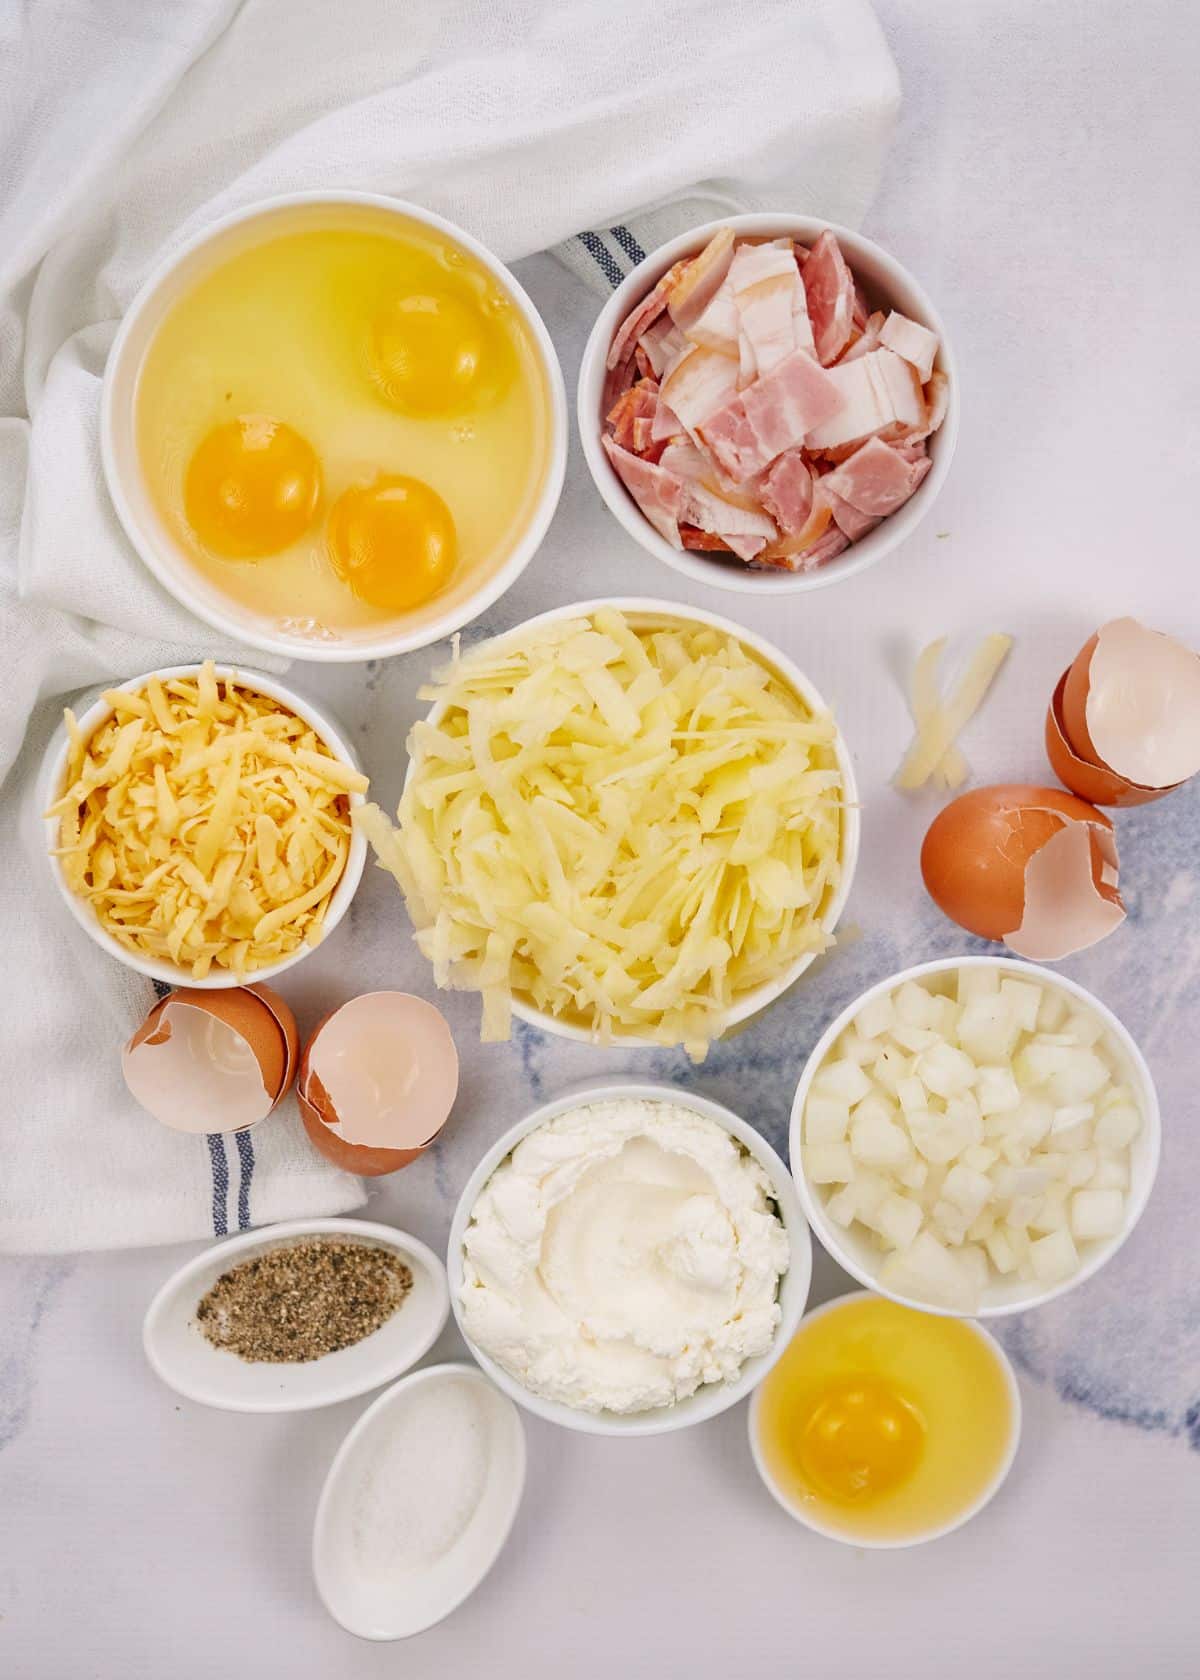 round white ramekins filled with ingredients for breakfast casserole